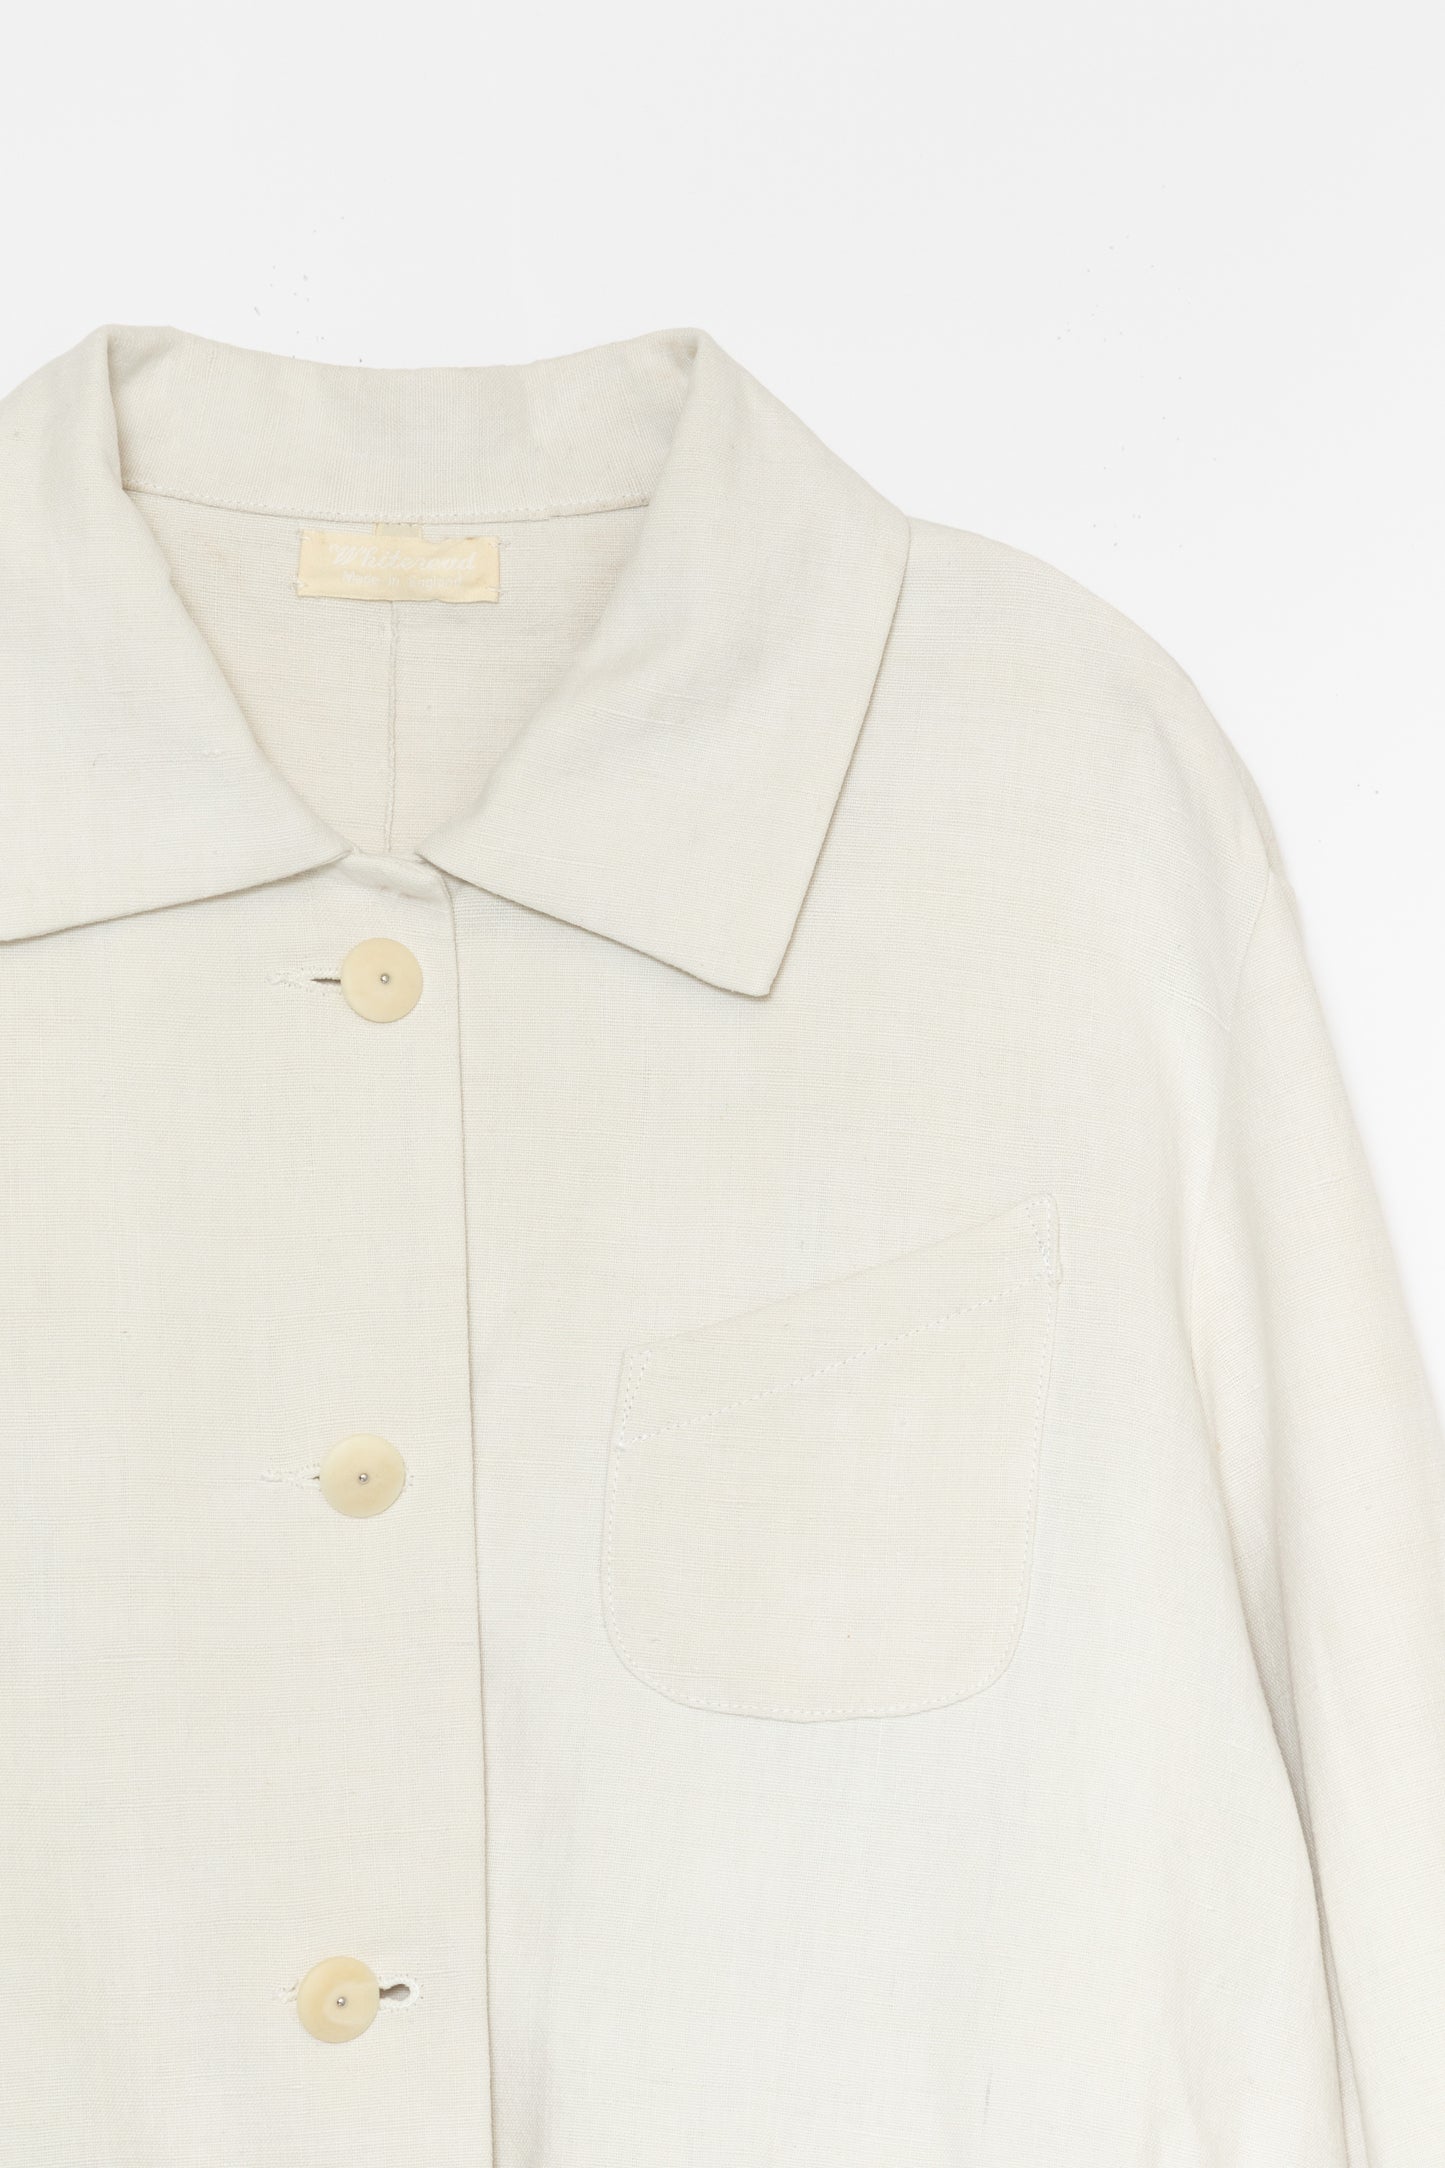 [Whiteread] Jacket 02 - Natural Linen